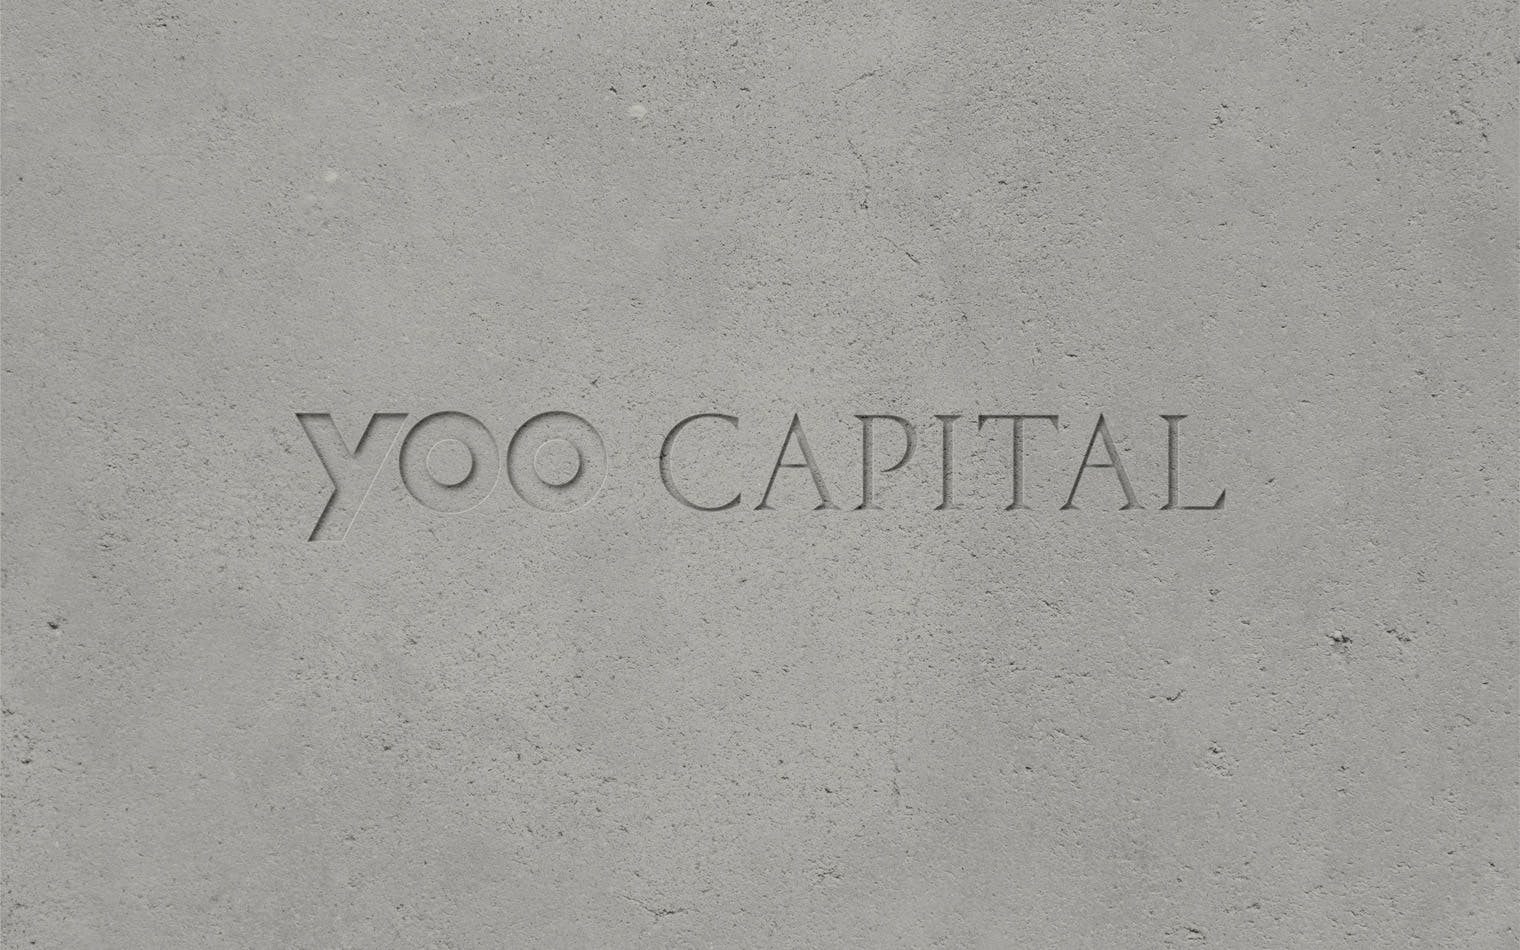 Yoo Capital - Branded Environment